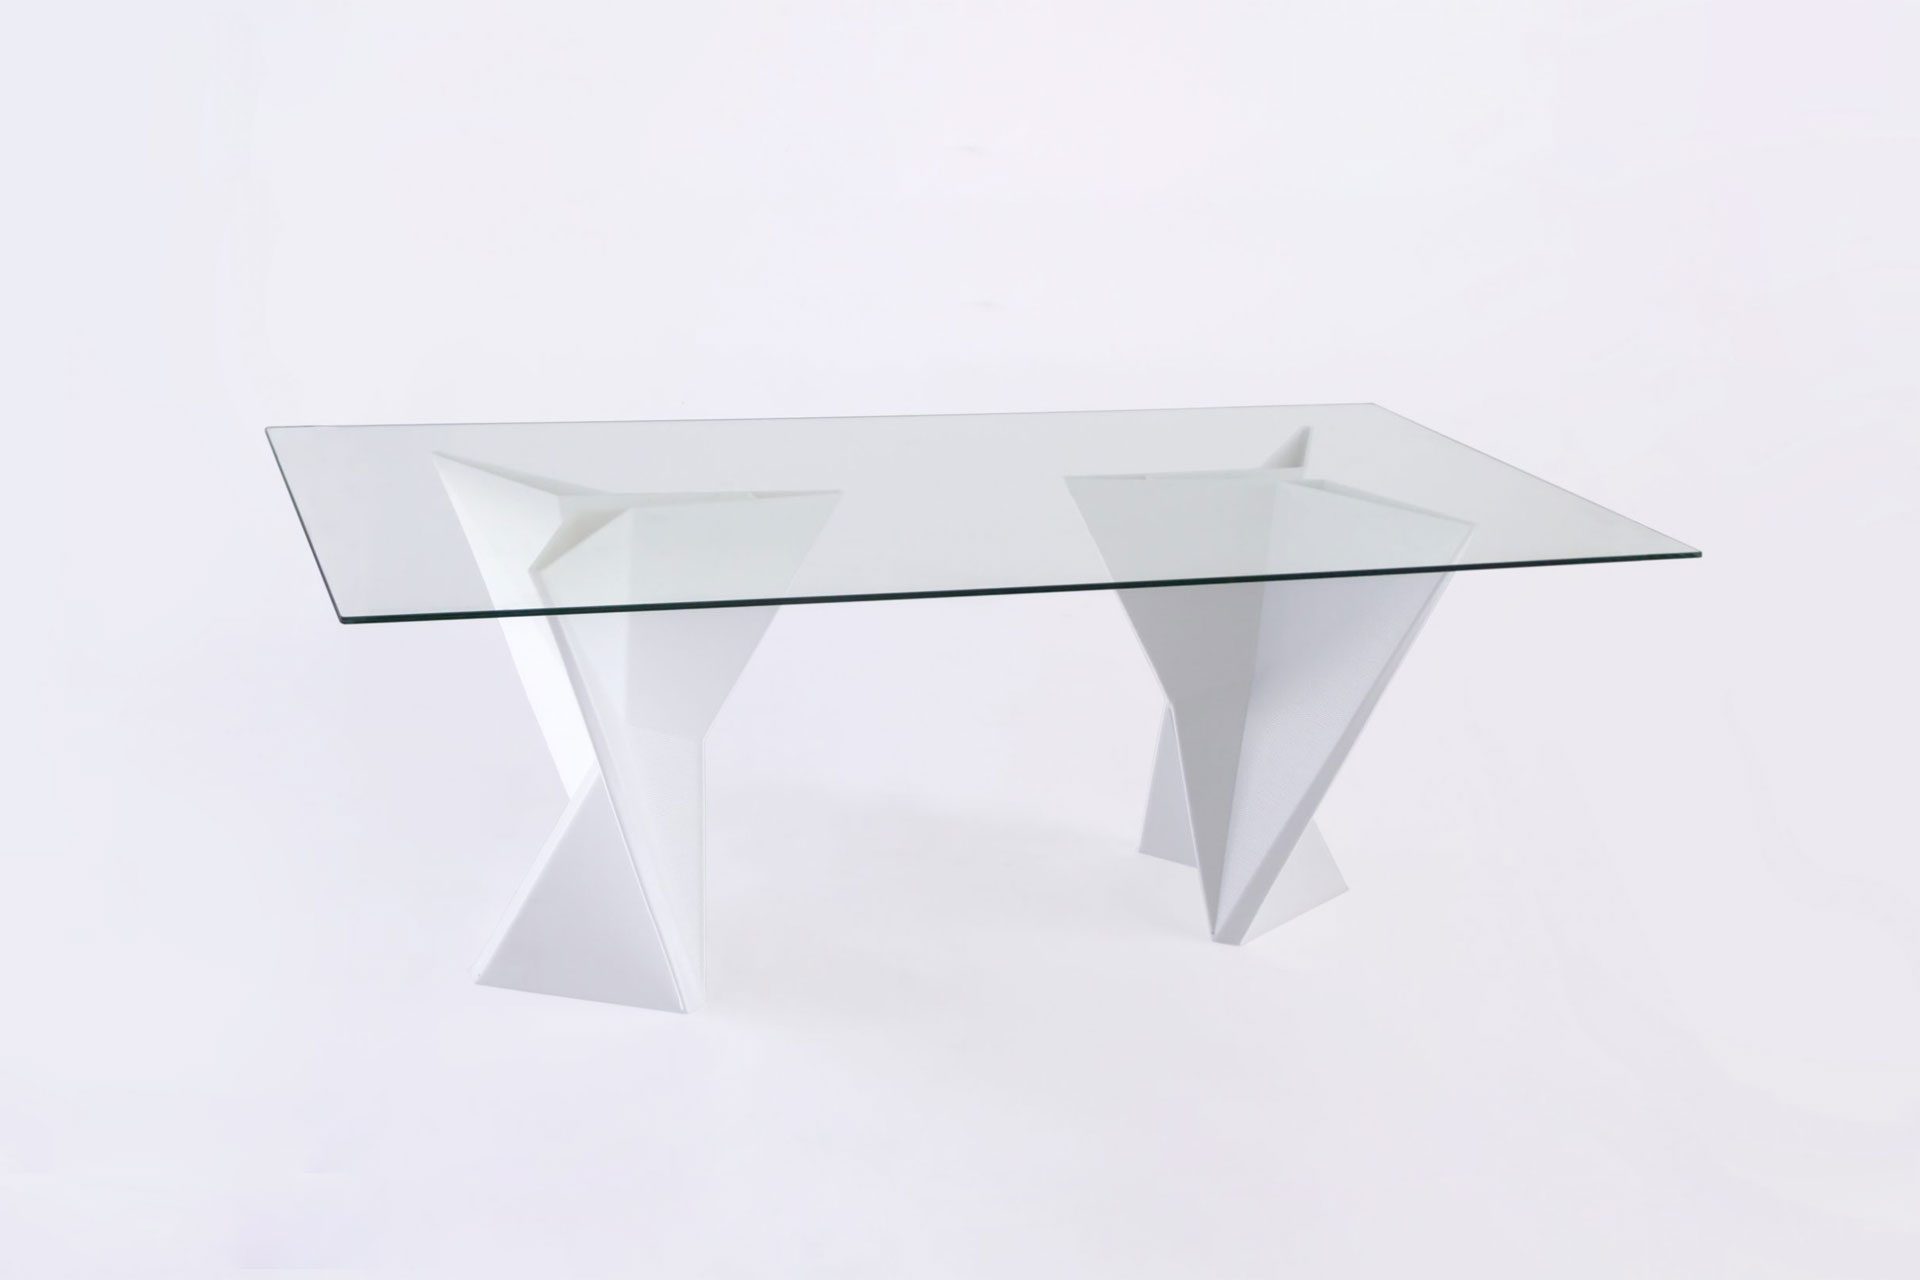 Nagami table